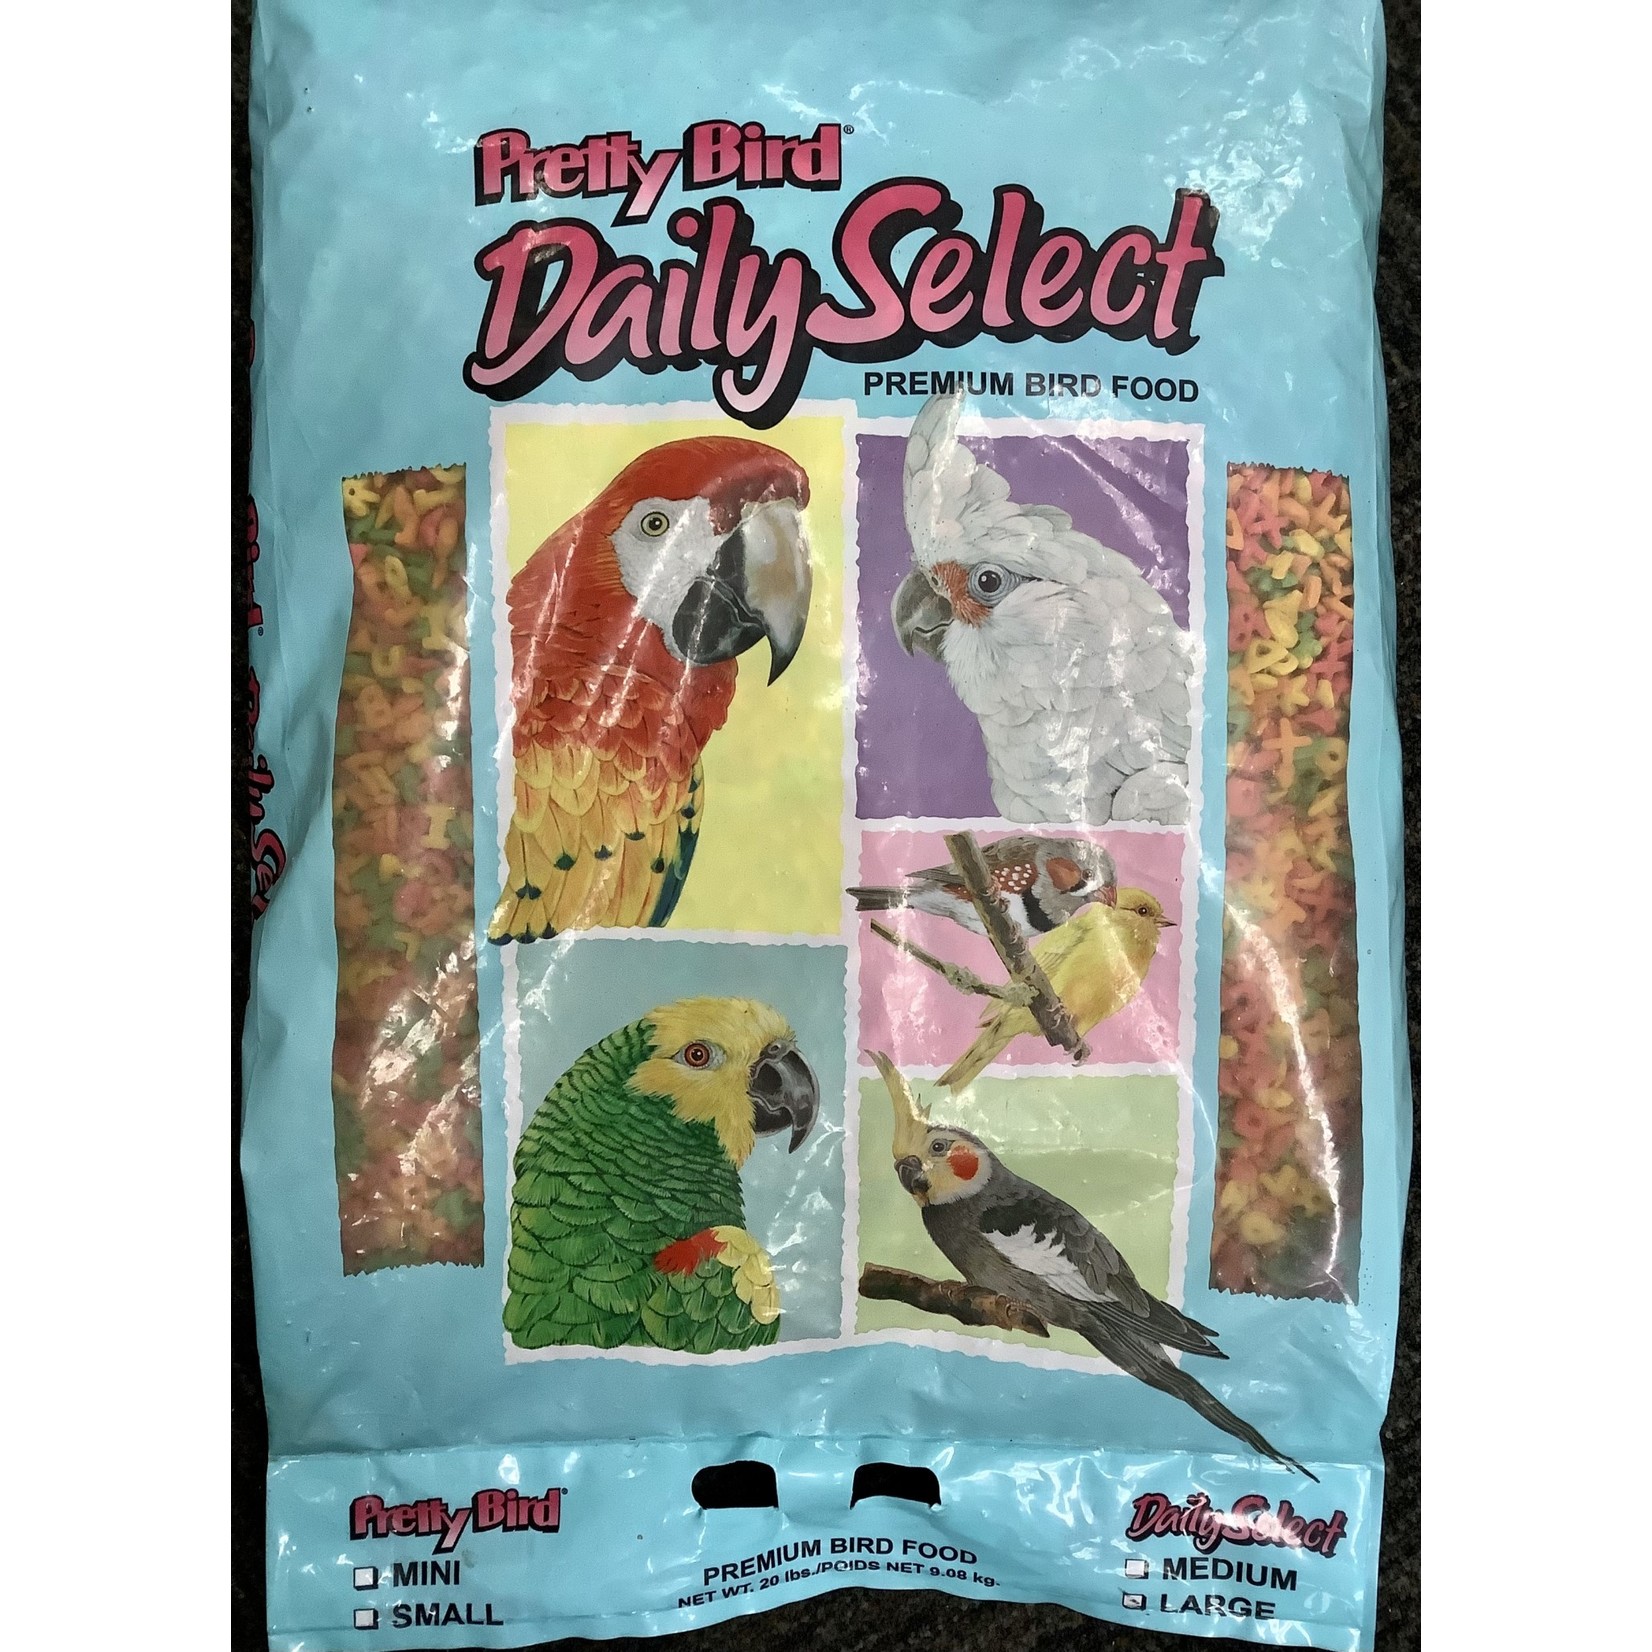 Pretty Bird PRETTY BIRD. Daily Select, premium bird food. Large 20lb